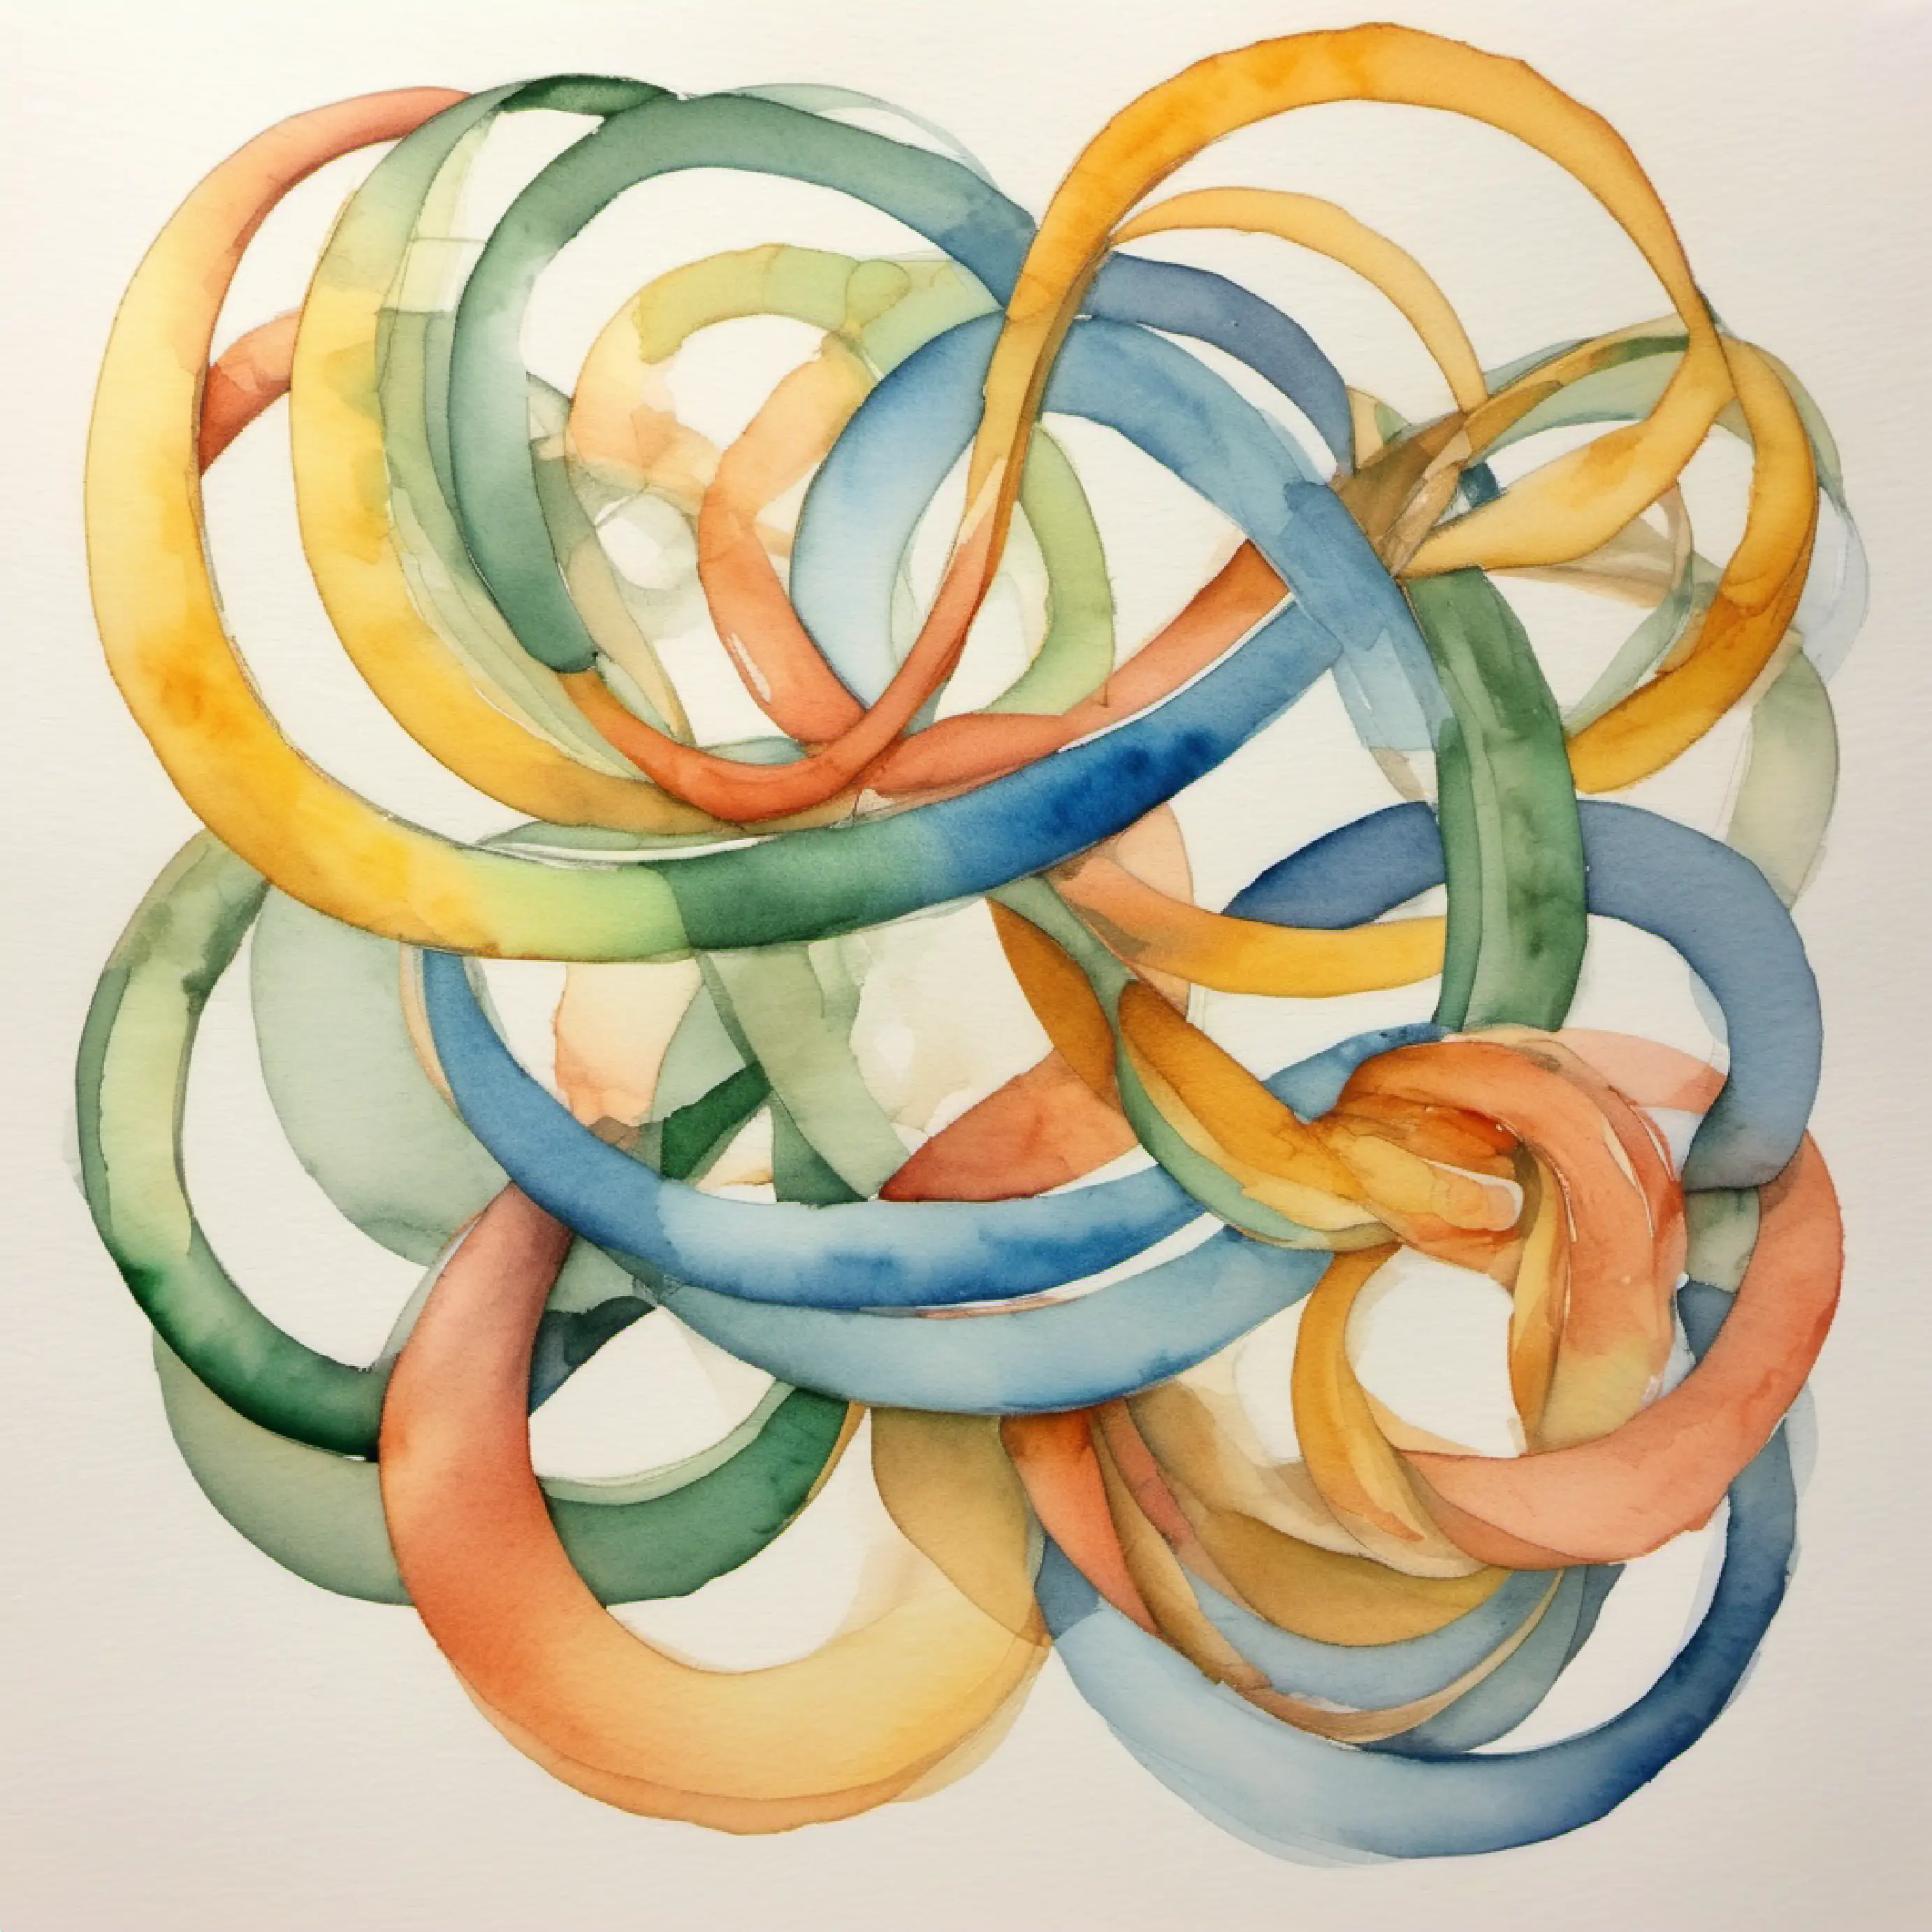 Figure-eight, looping expert, infinite's characteristic of making loops and being infinite.